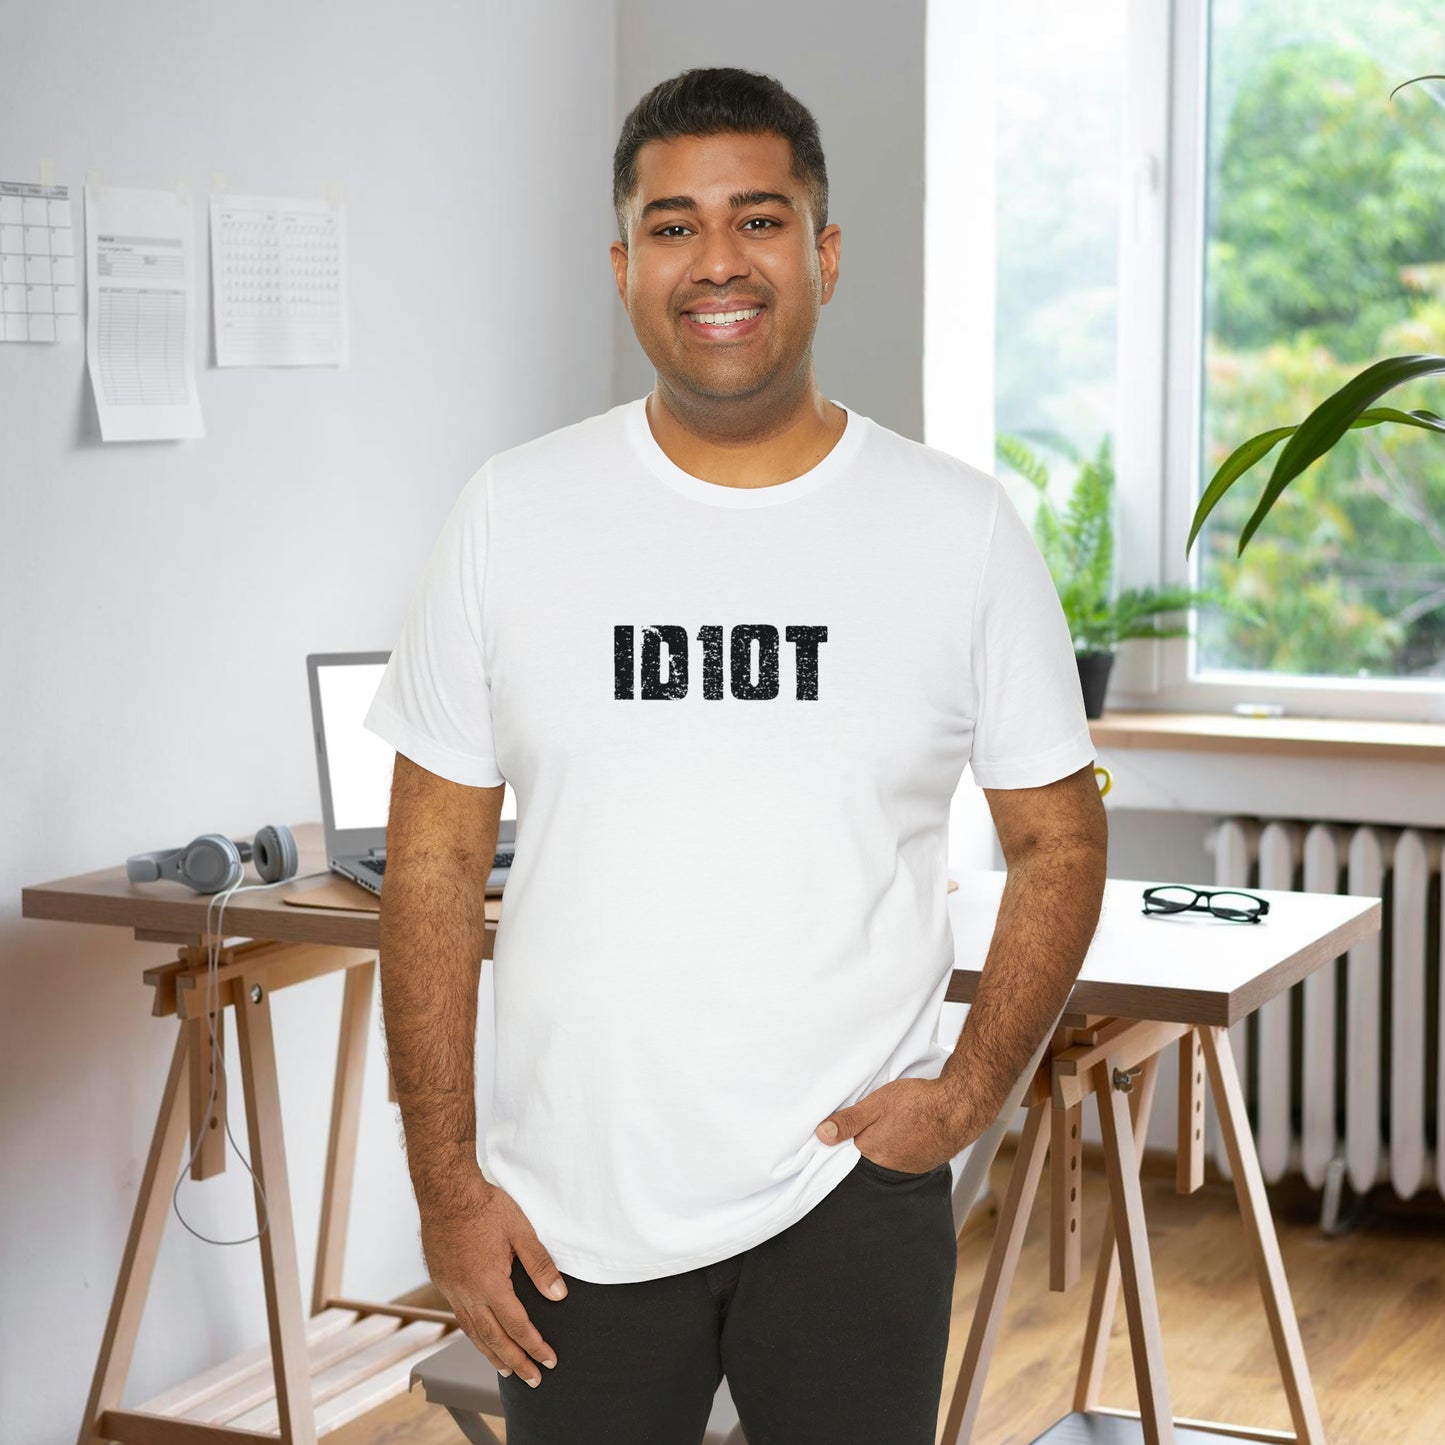 ID10T - Unisex T-Shirt